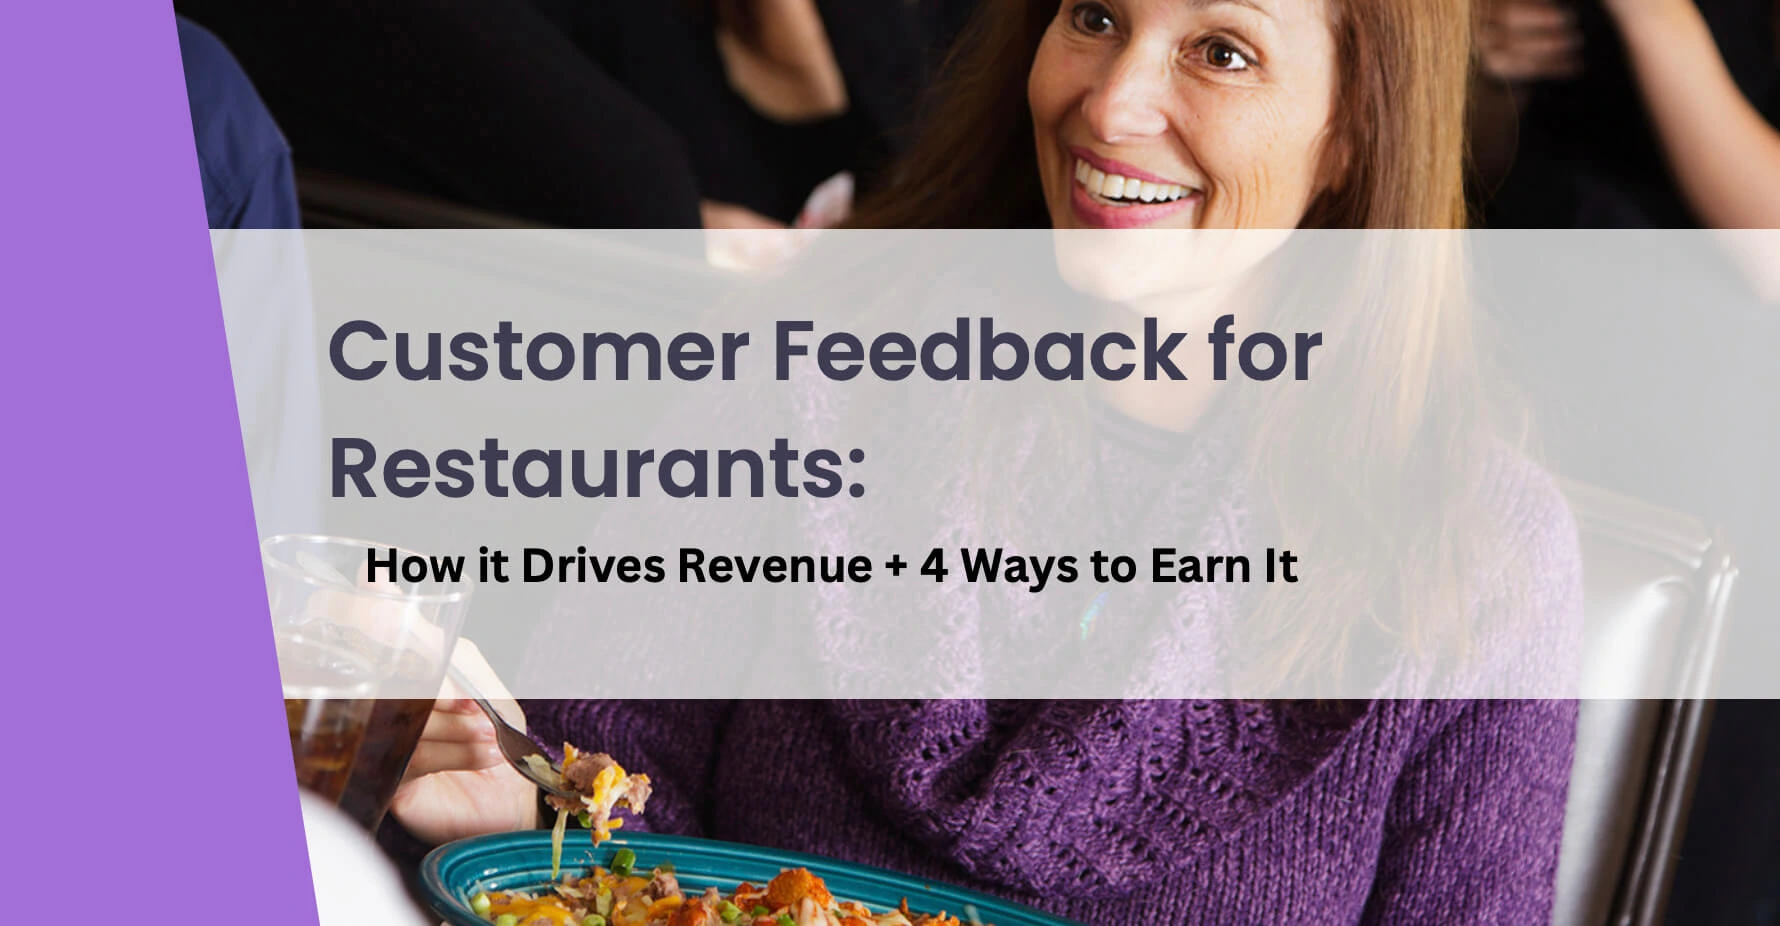 Customer feedback for restaurants